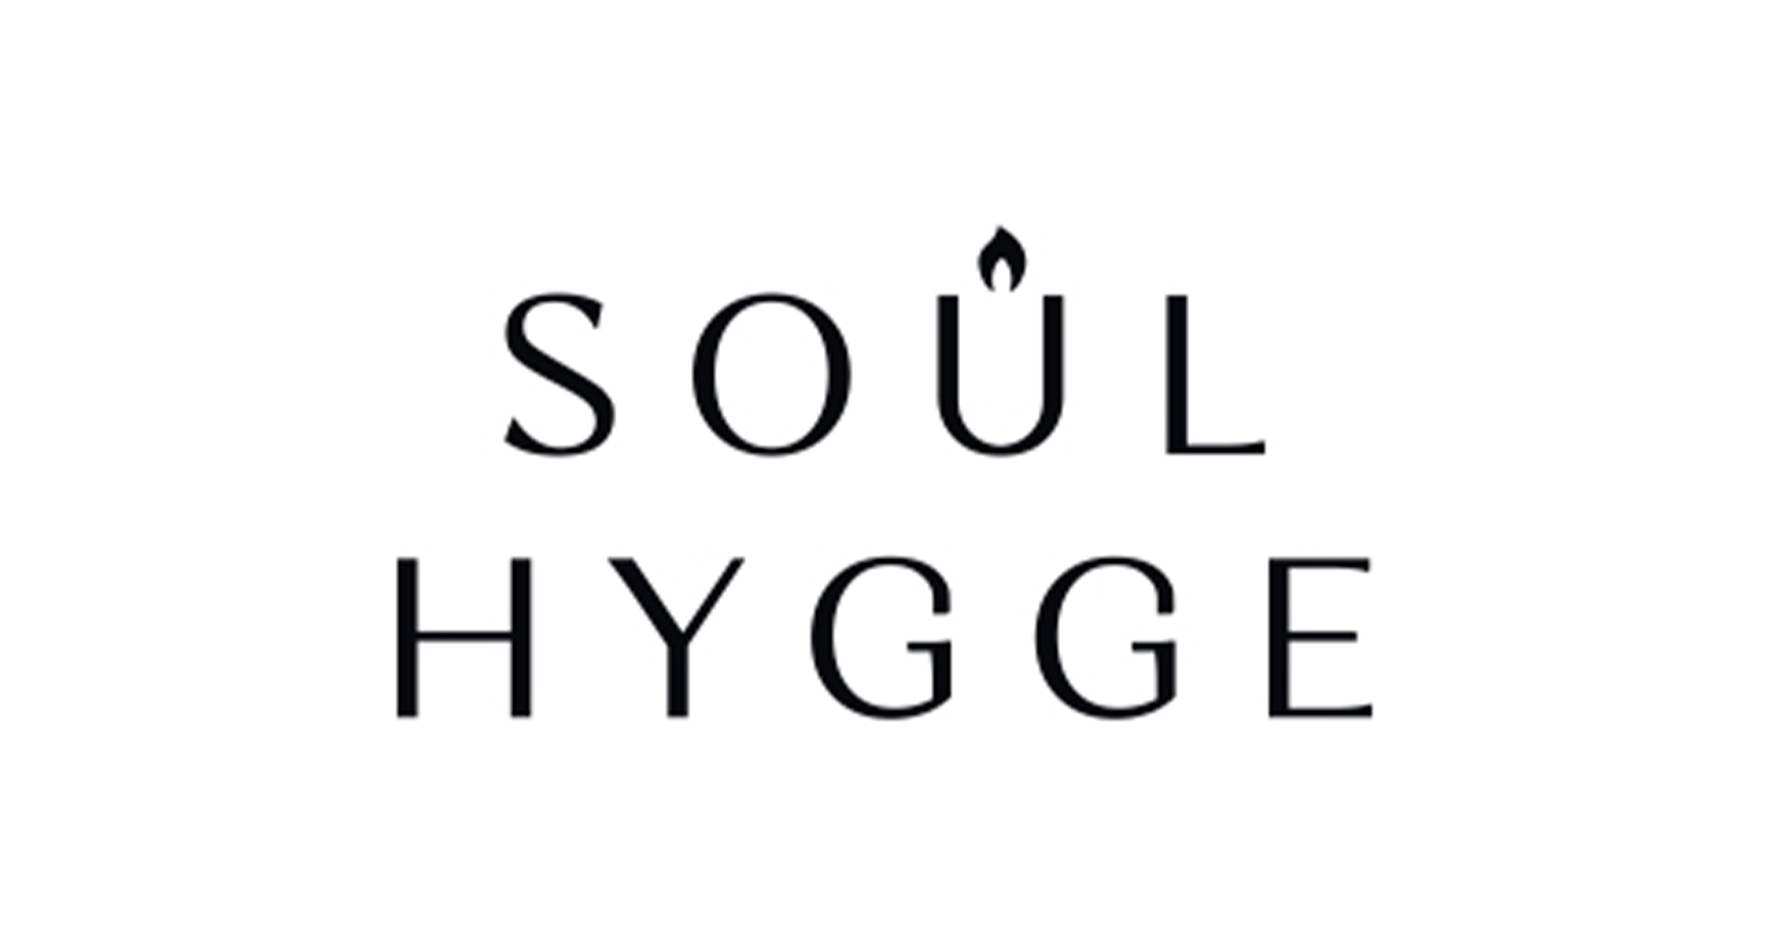 SOÛL HYGGE Одежда и аксессуары, купить онлайн, SOÛL HYGGE в универмаге Bolshoy